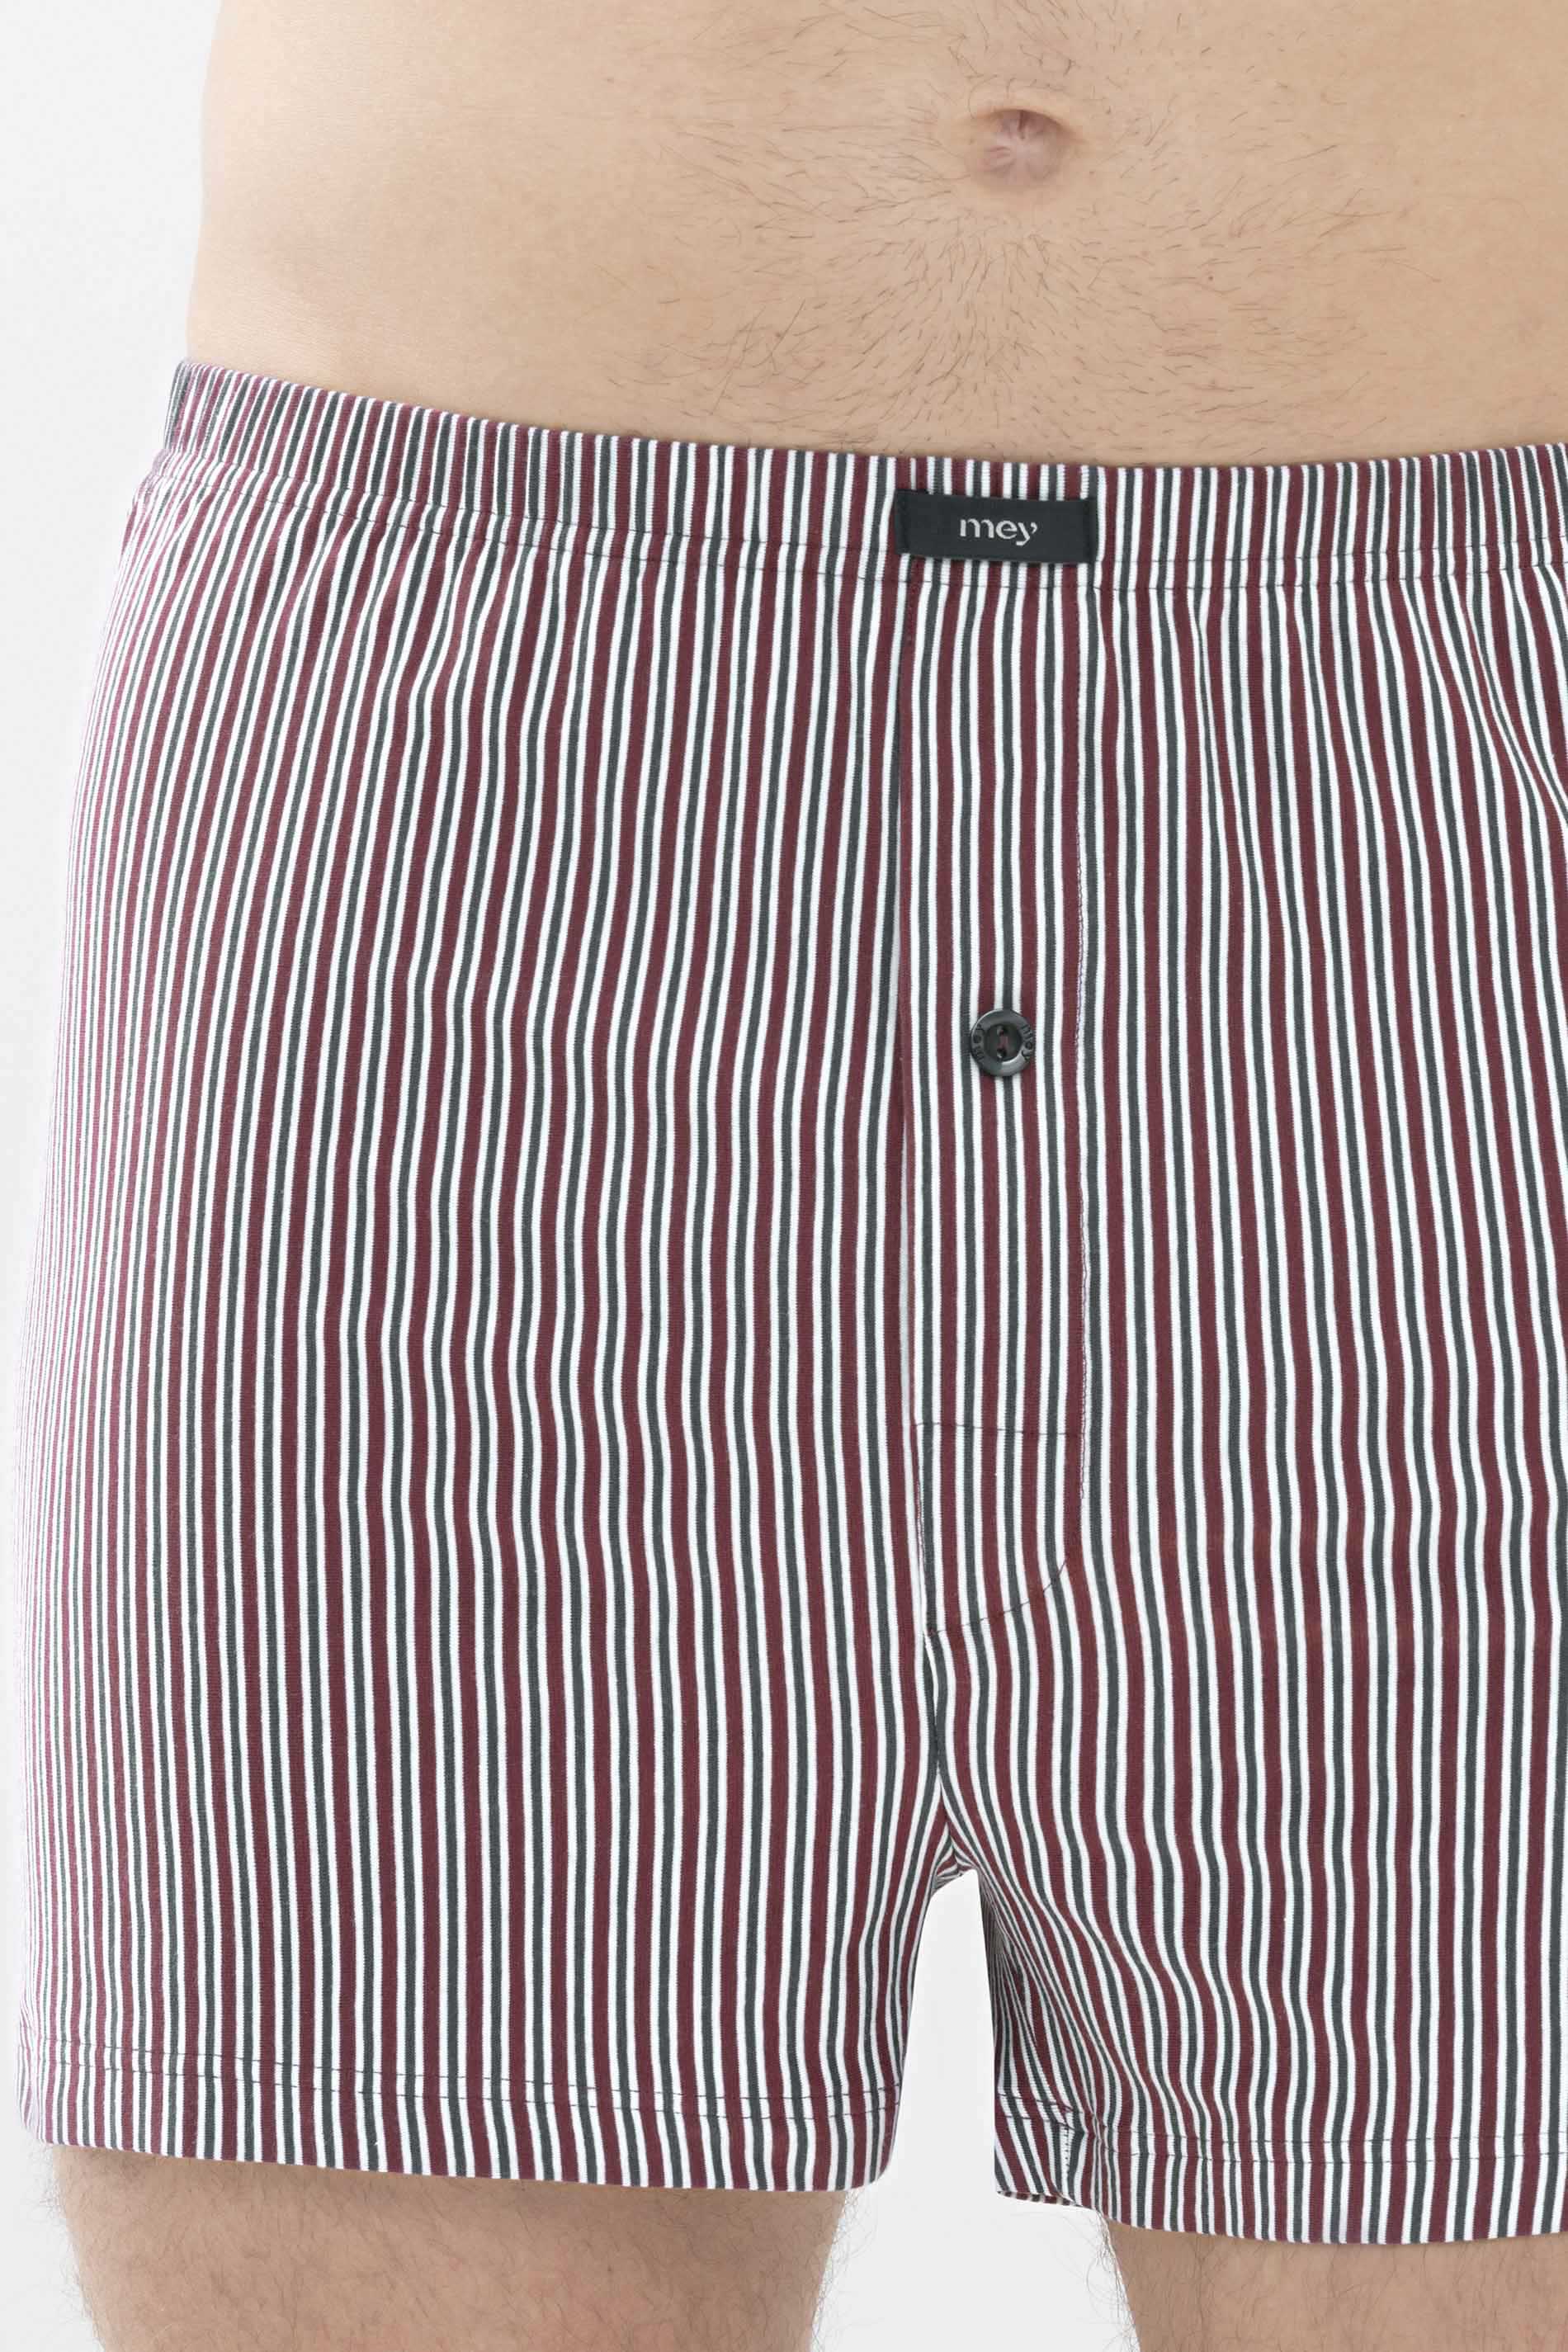 Boxer shorts Oxblood Serie 3 Col Stripes Detail View 01 | mey®